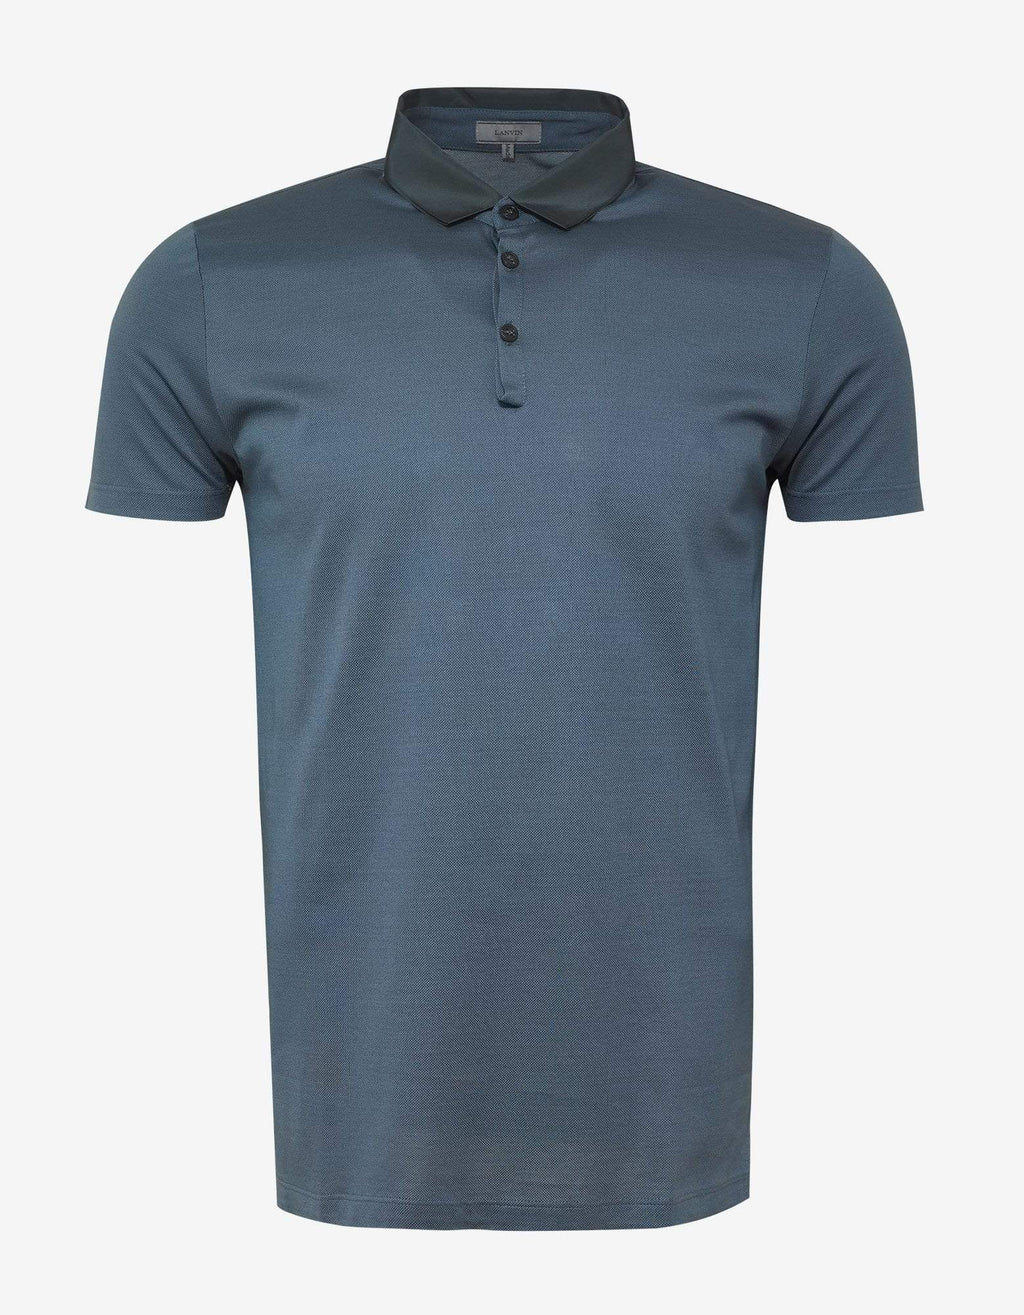 Lanvin Lanvin Metallic Blue Polo T-Shirt with Grosgrain Collar